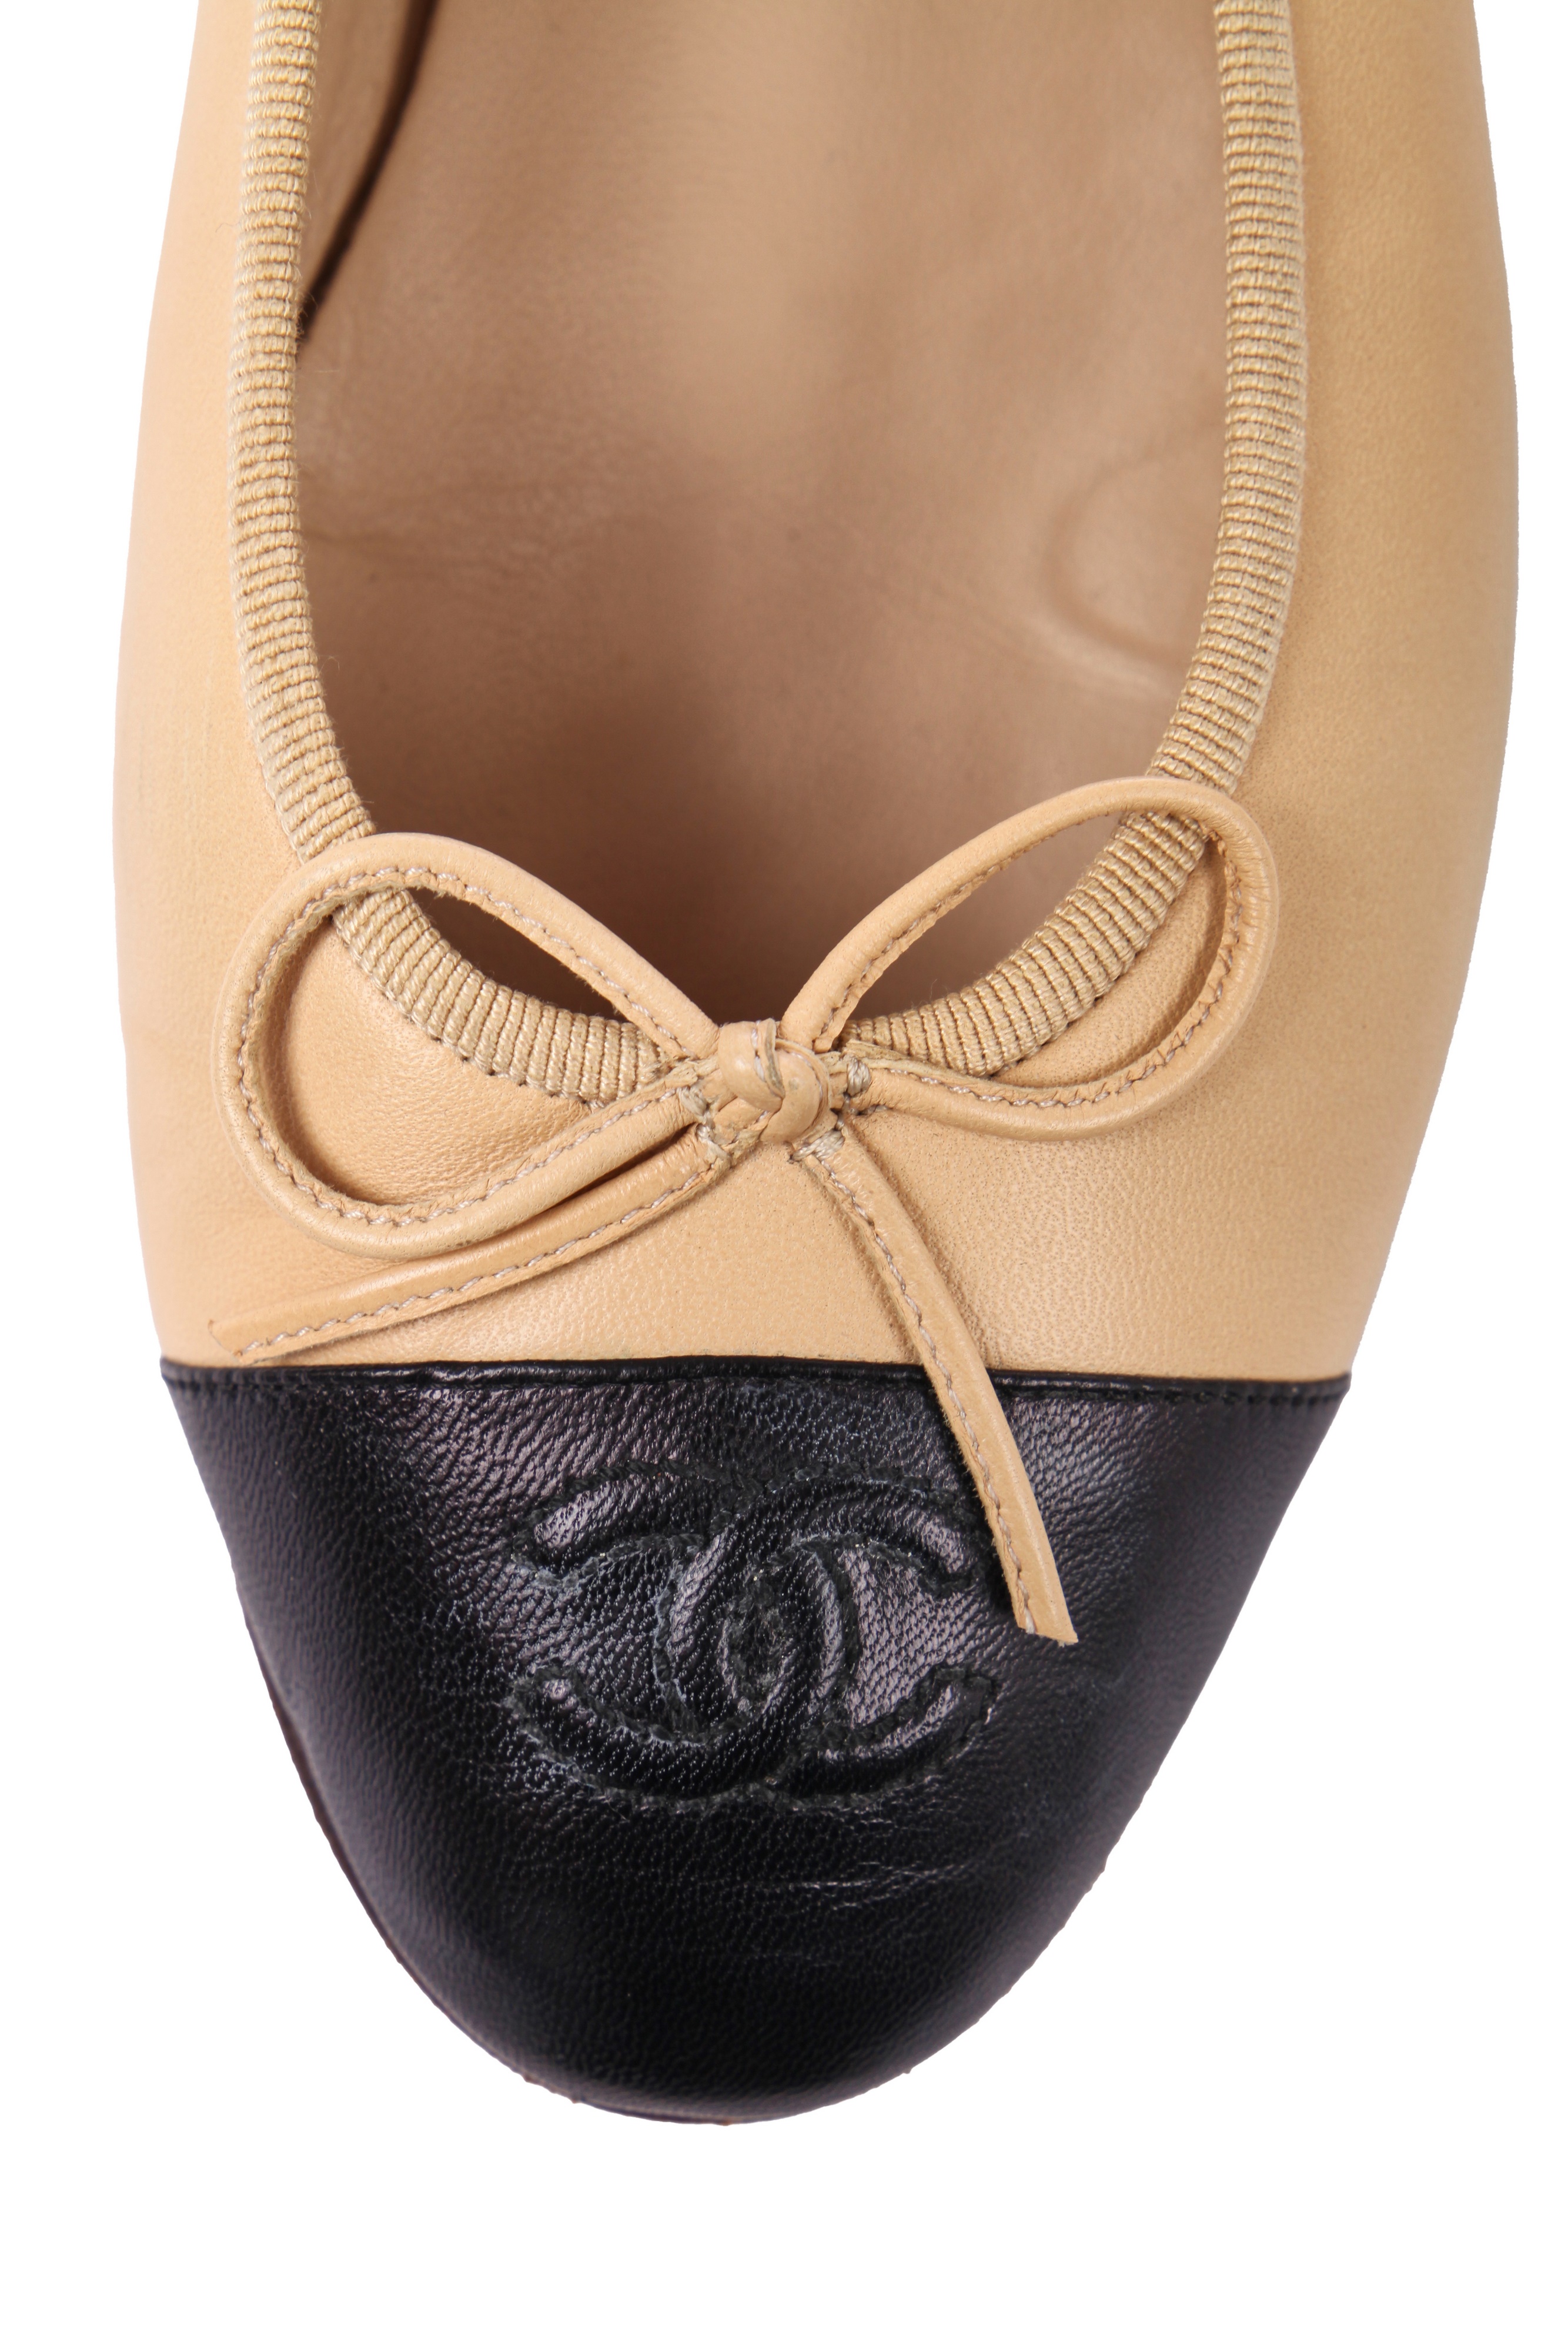 Chanel Metallic Cap Toe Ballerina Flats